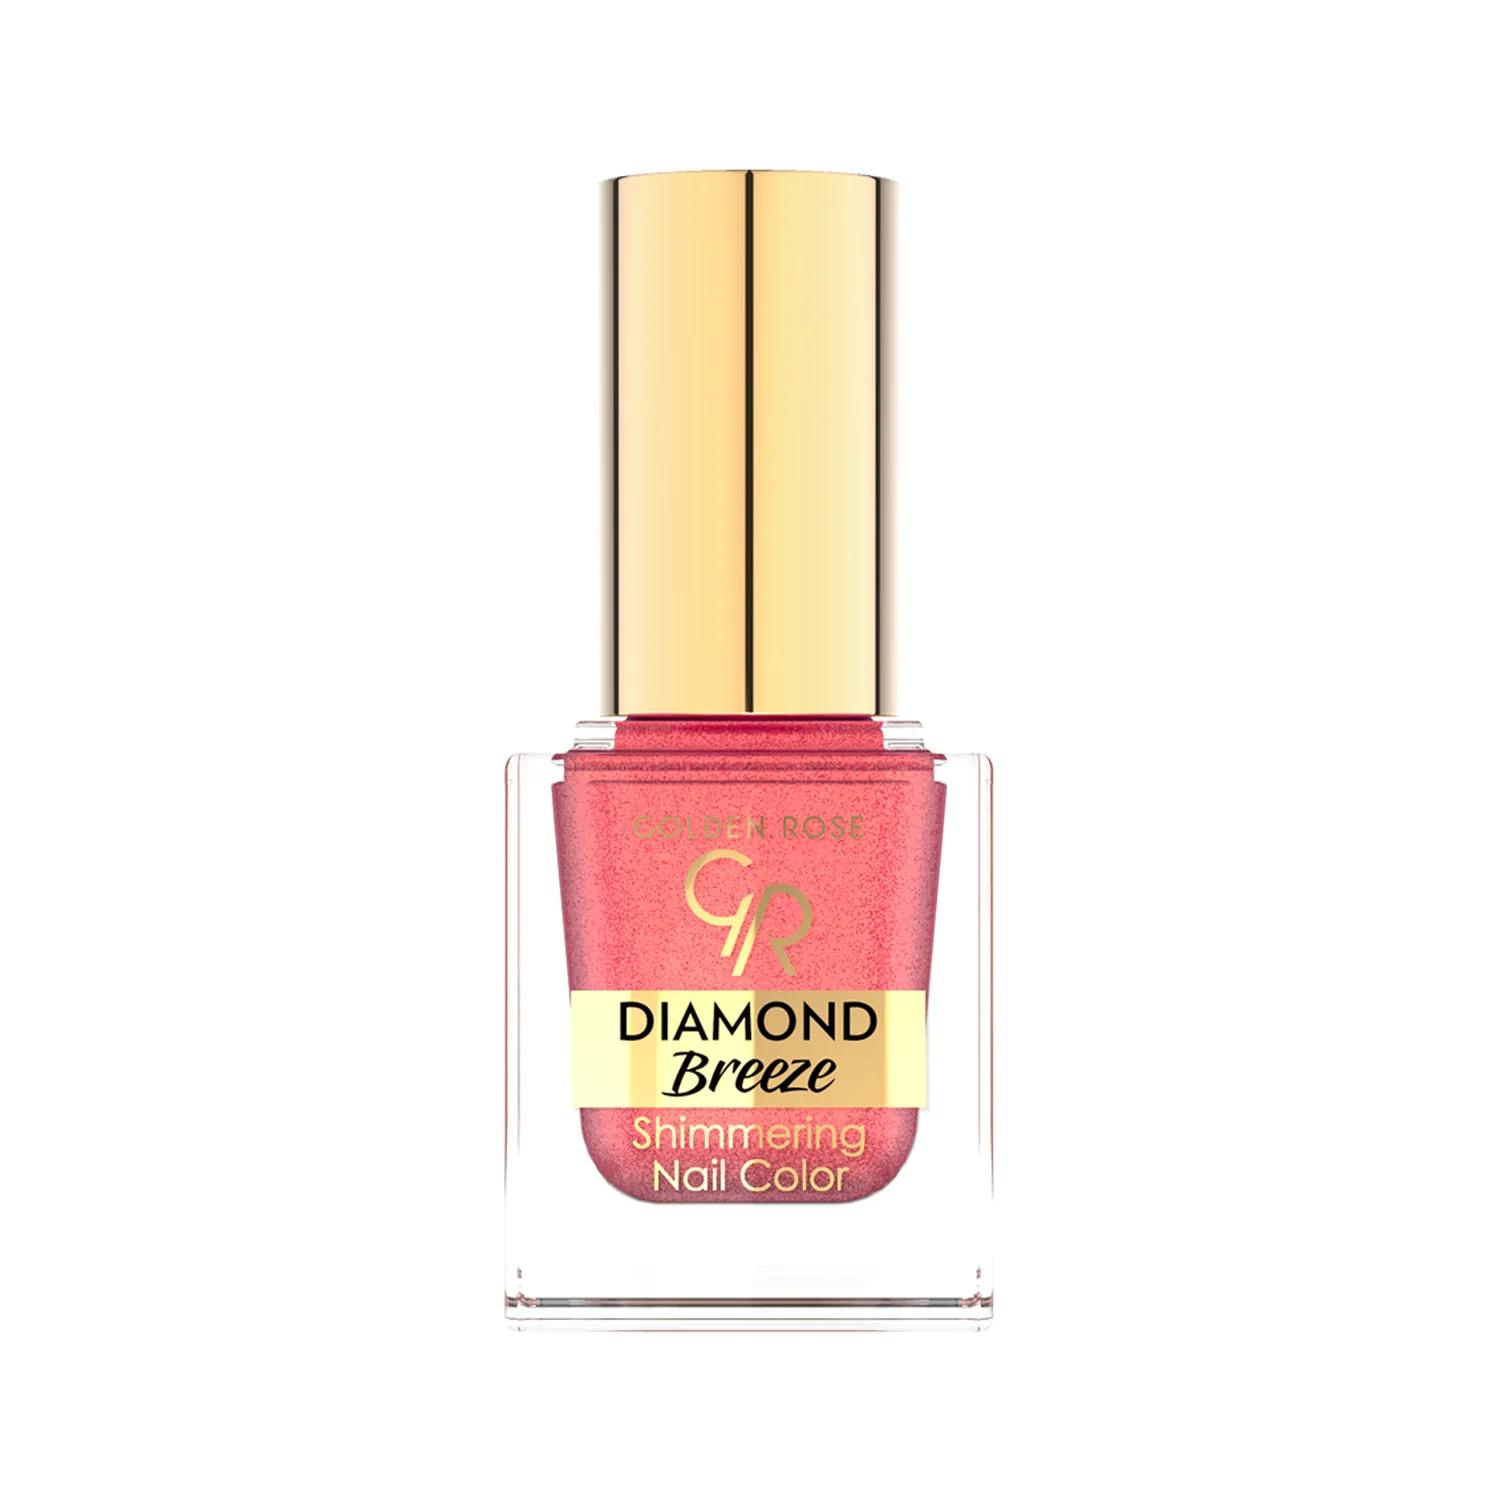 Golden Rose Diamond Breeze Shimmering Nail Color - 02 Pink Sparkle